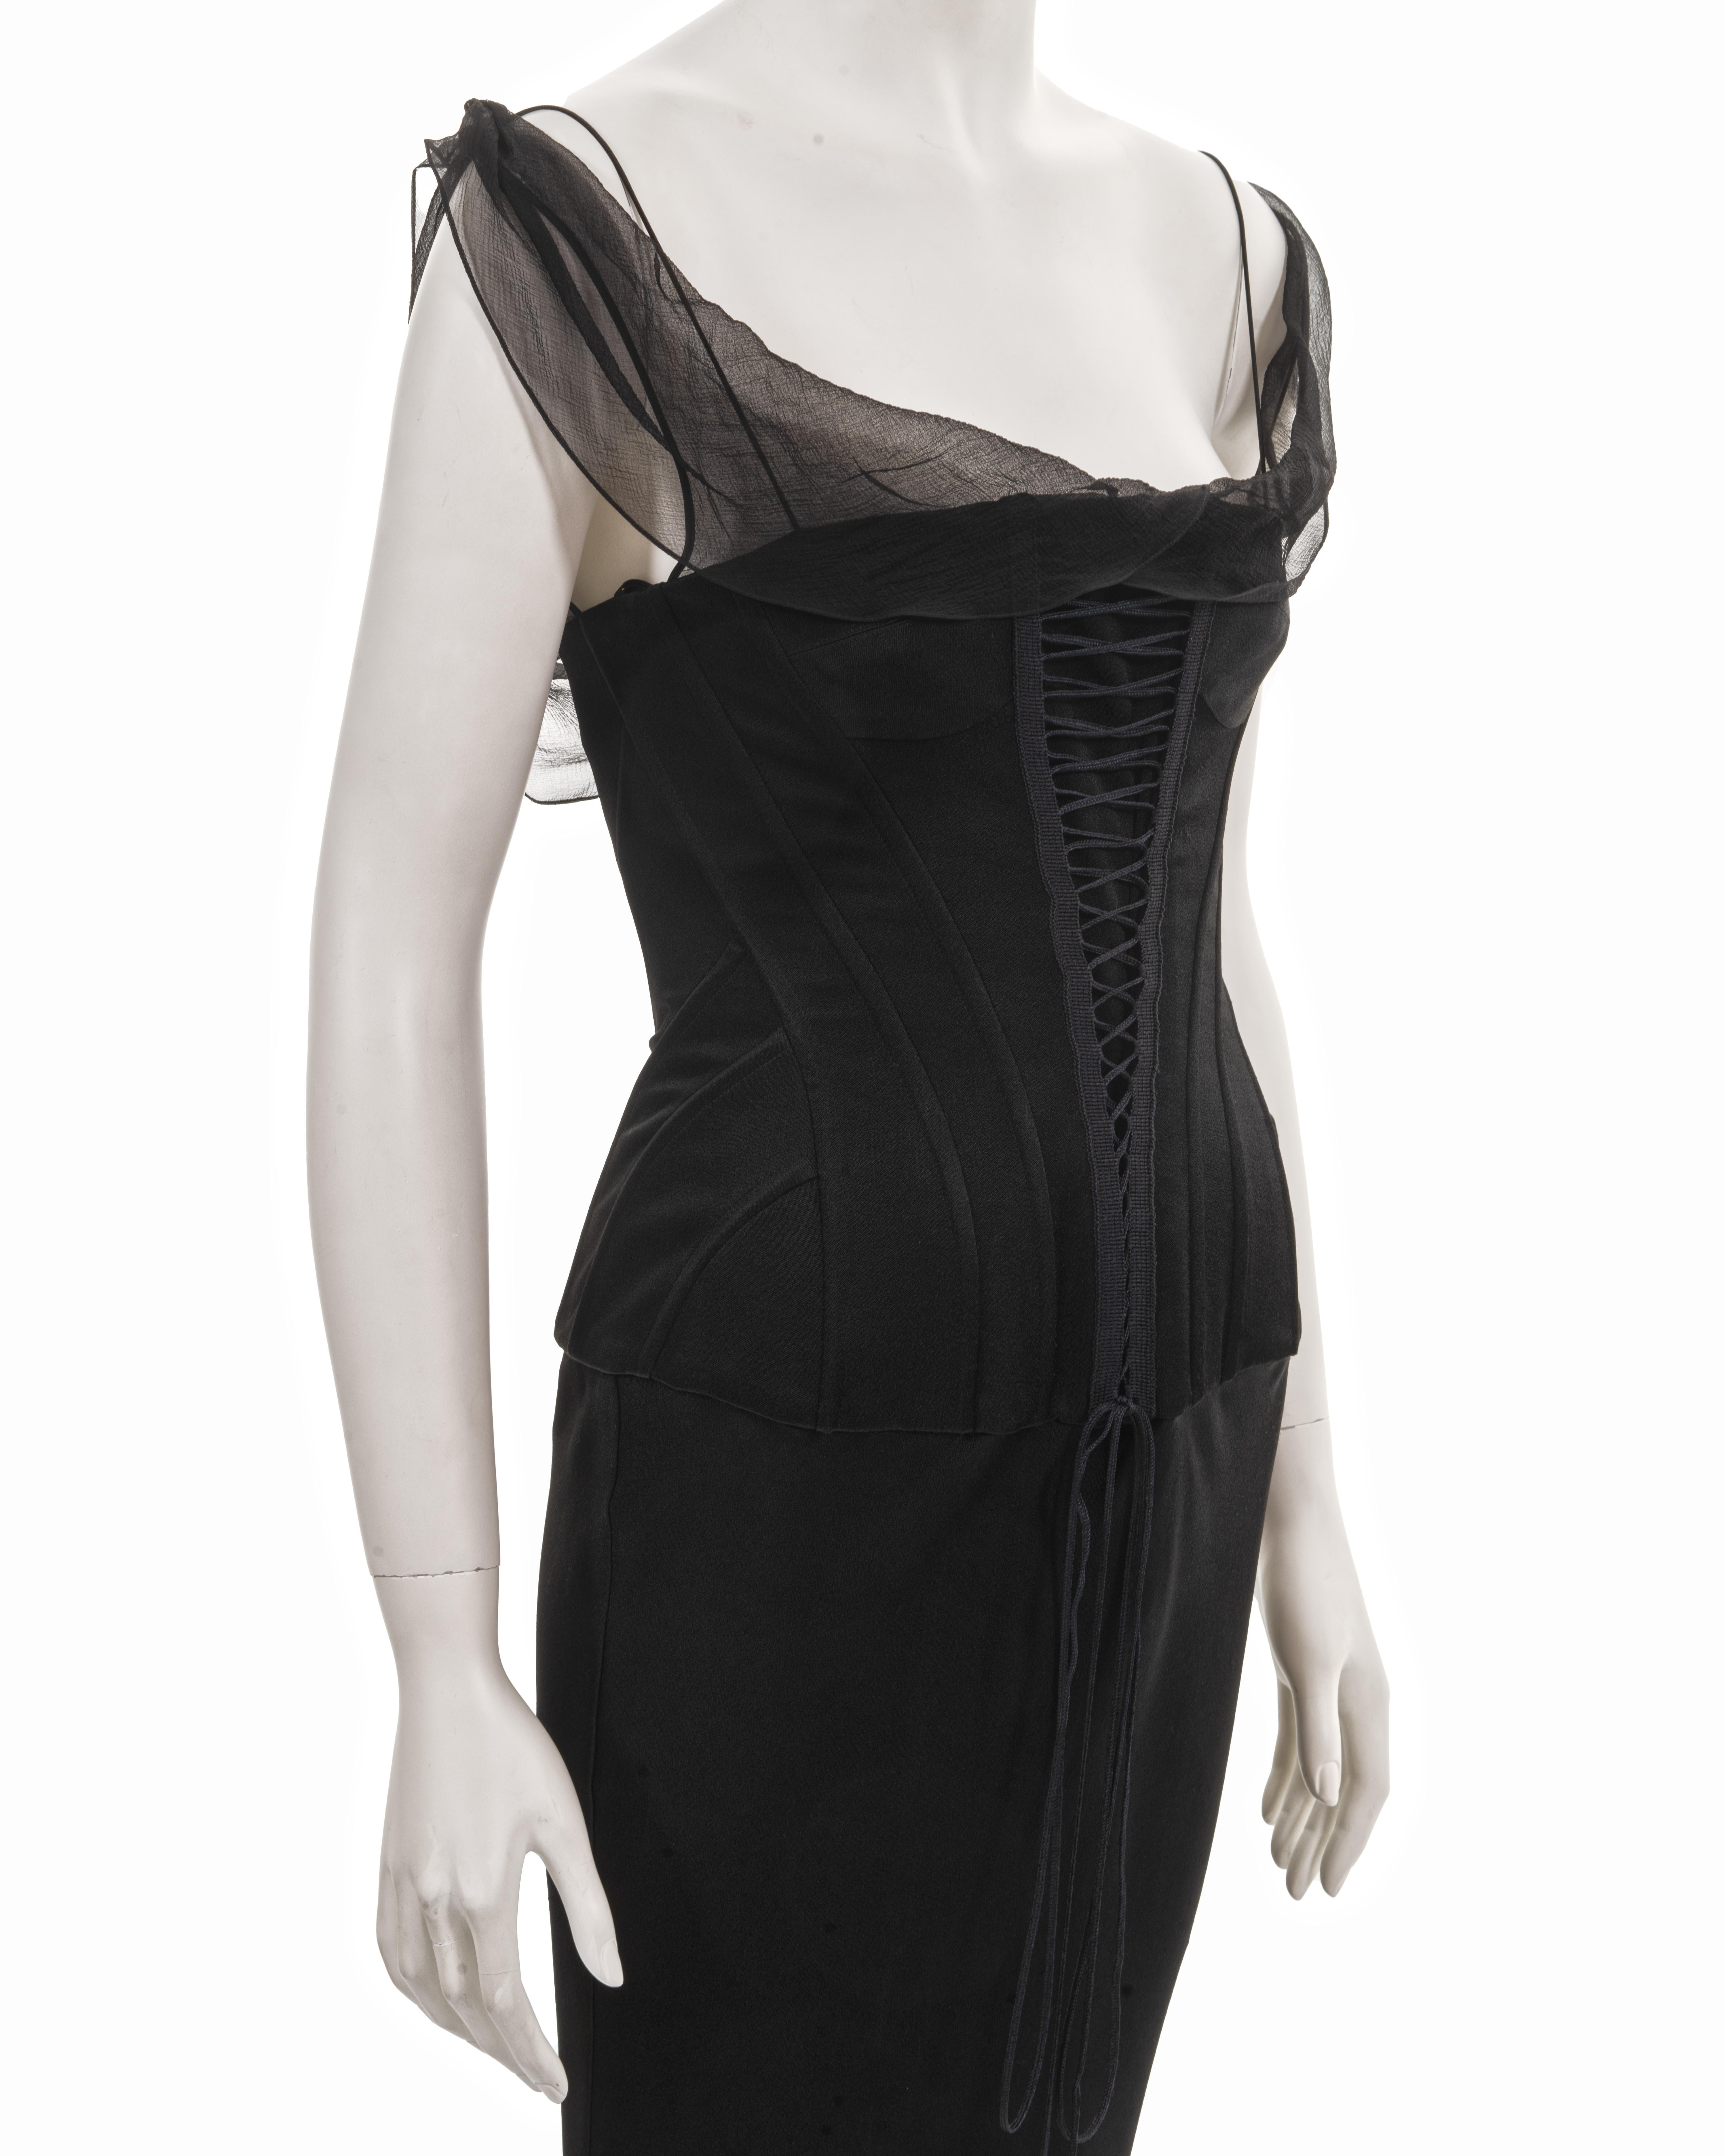 John Galliano black satin evening dress with integrated corset, ss 2003 5